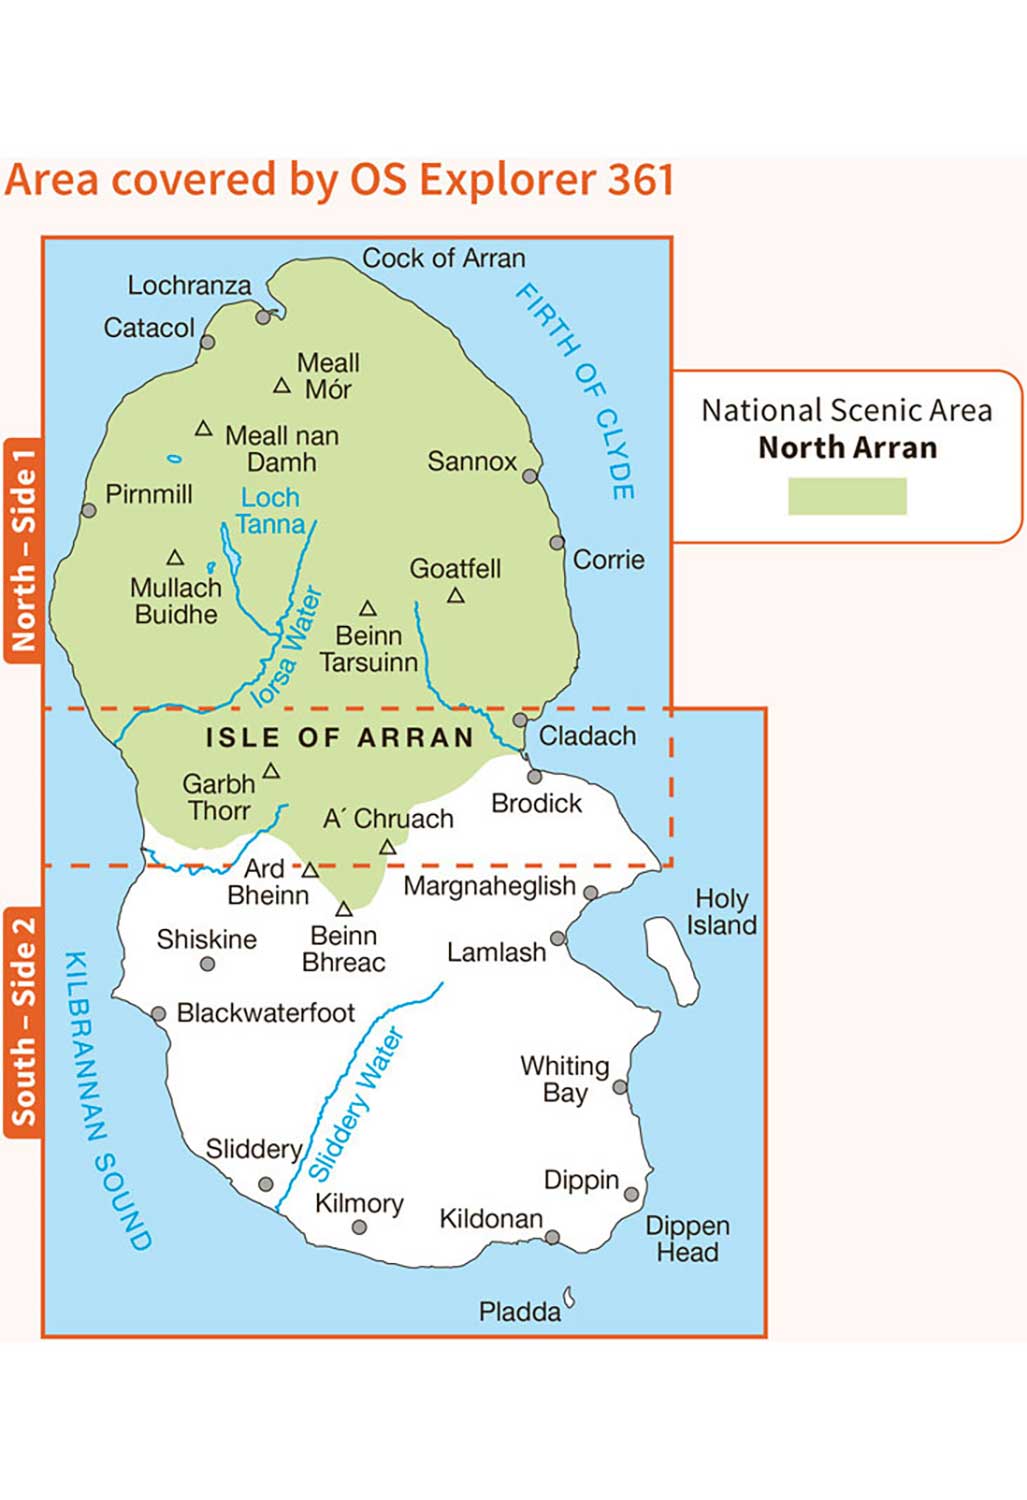 Ordnance Survey Isle of Arran - OS Explorer 361 Map